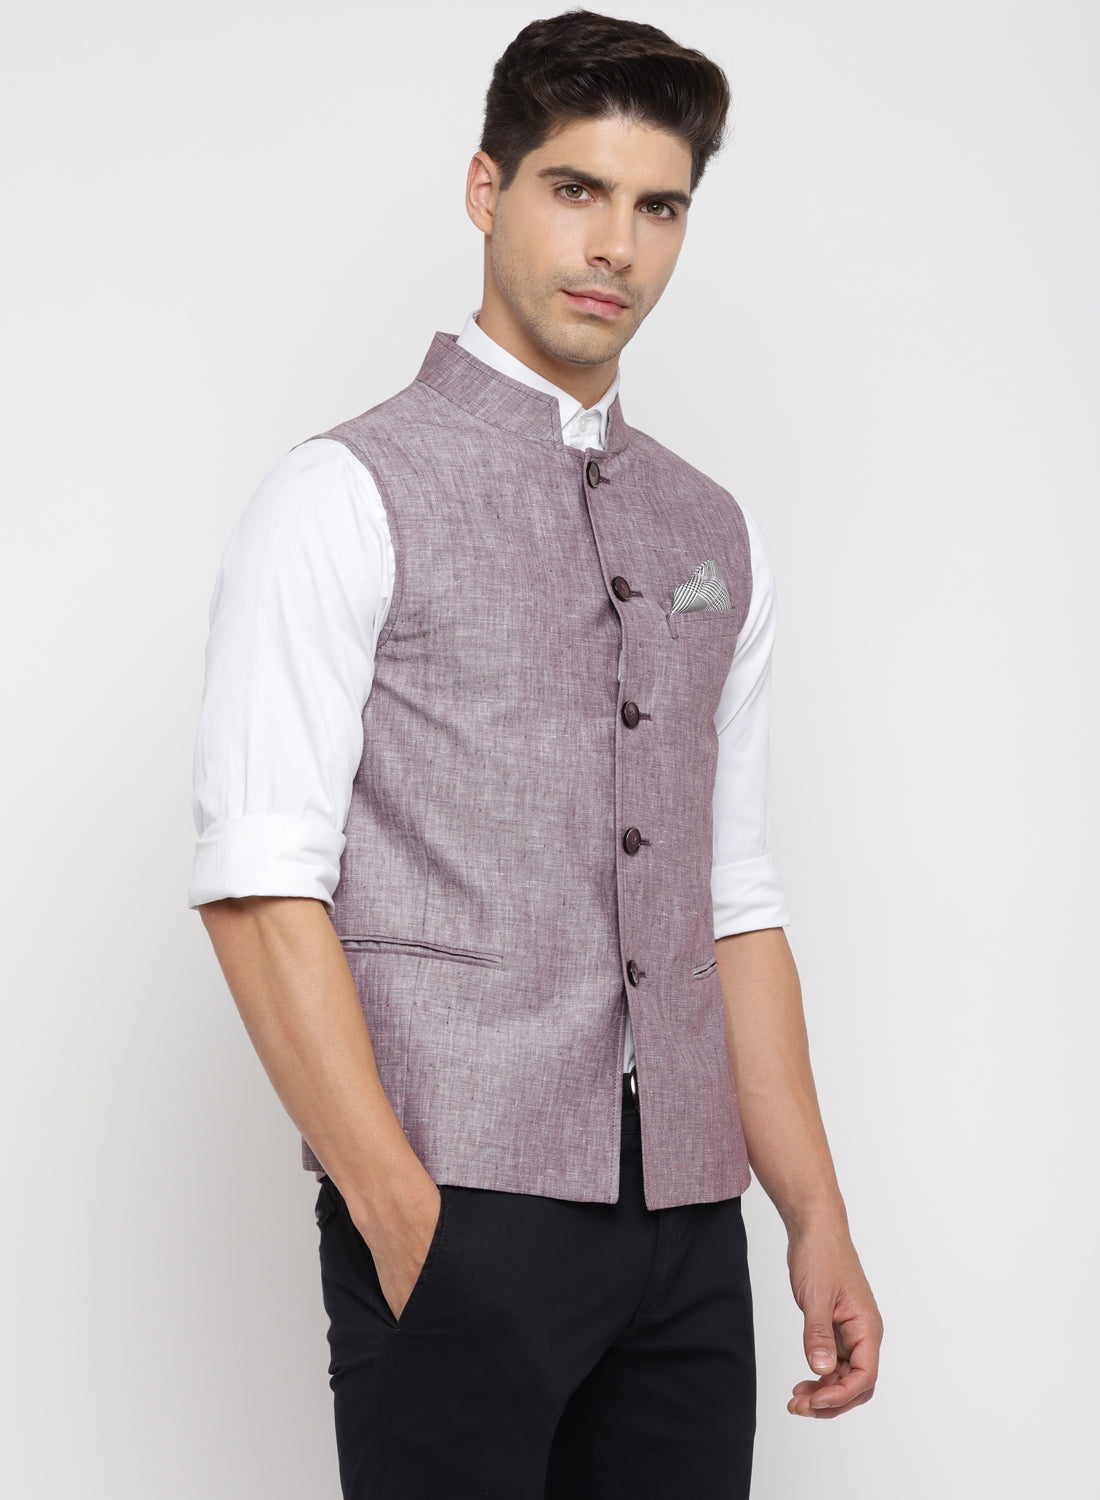 Nehru Jackets For Men - Buy Mens Ethnic Jackets